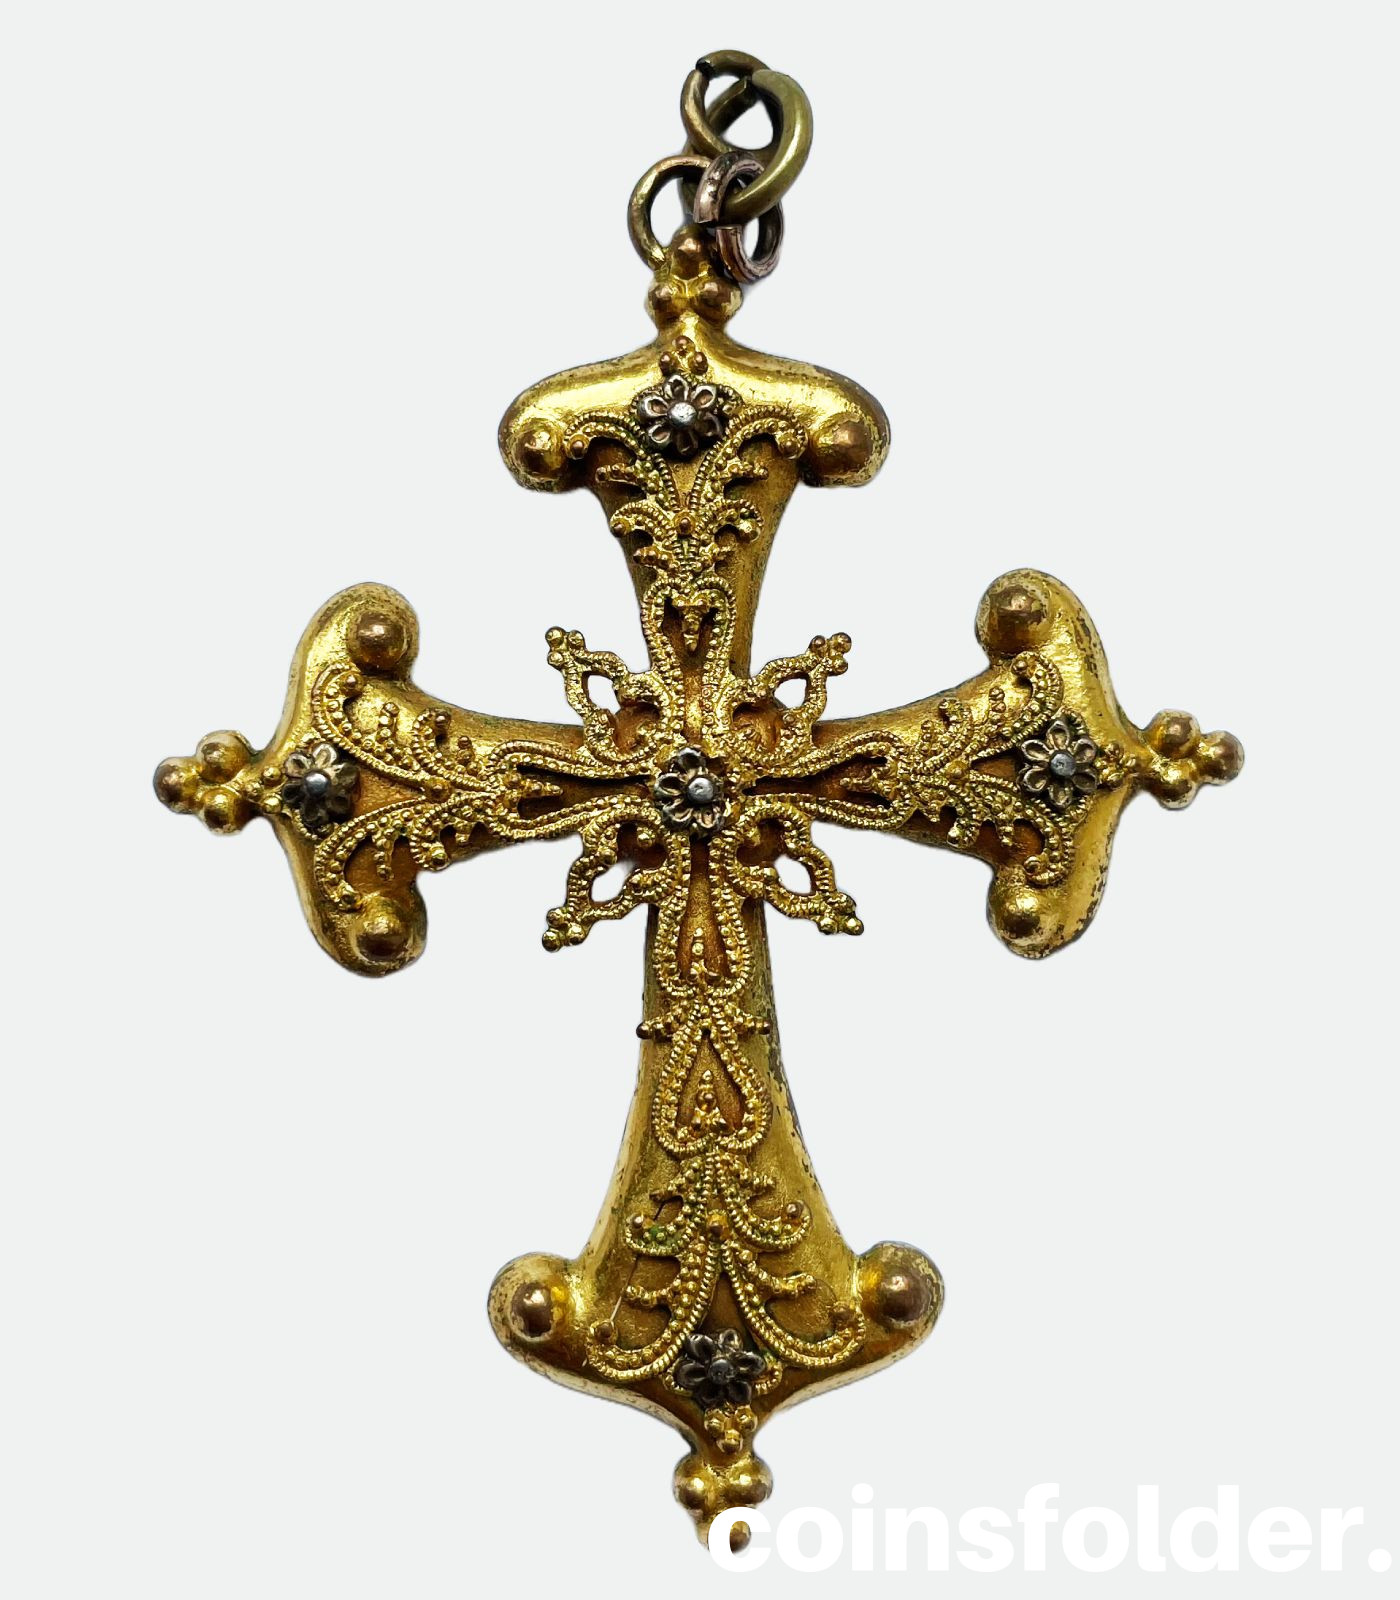 Antique XVII century gilded cross pendant